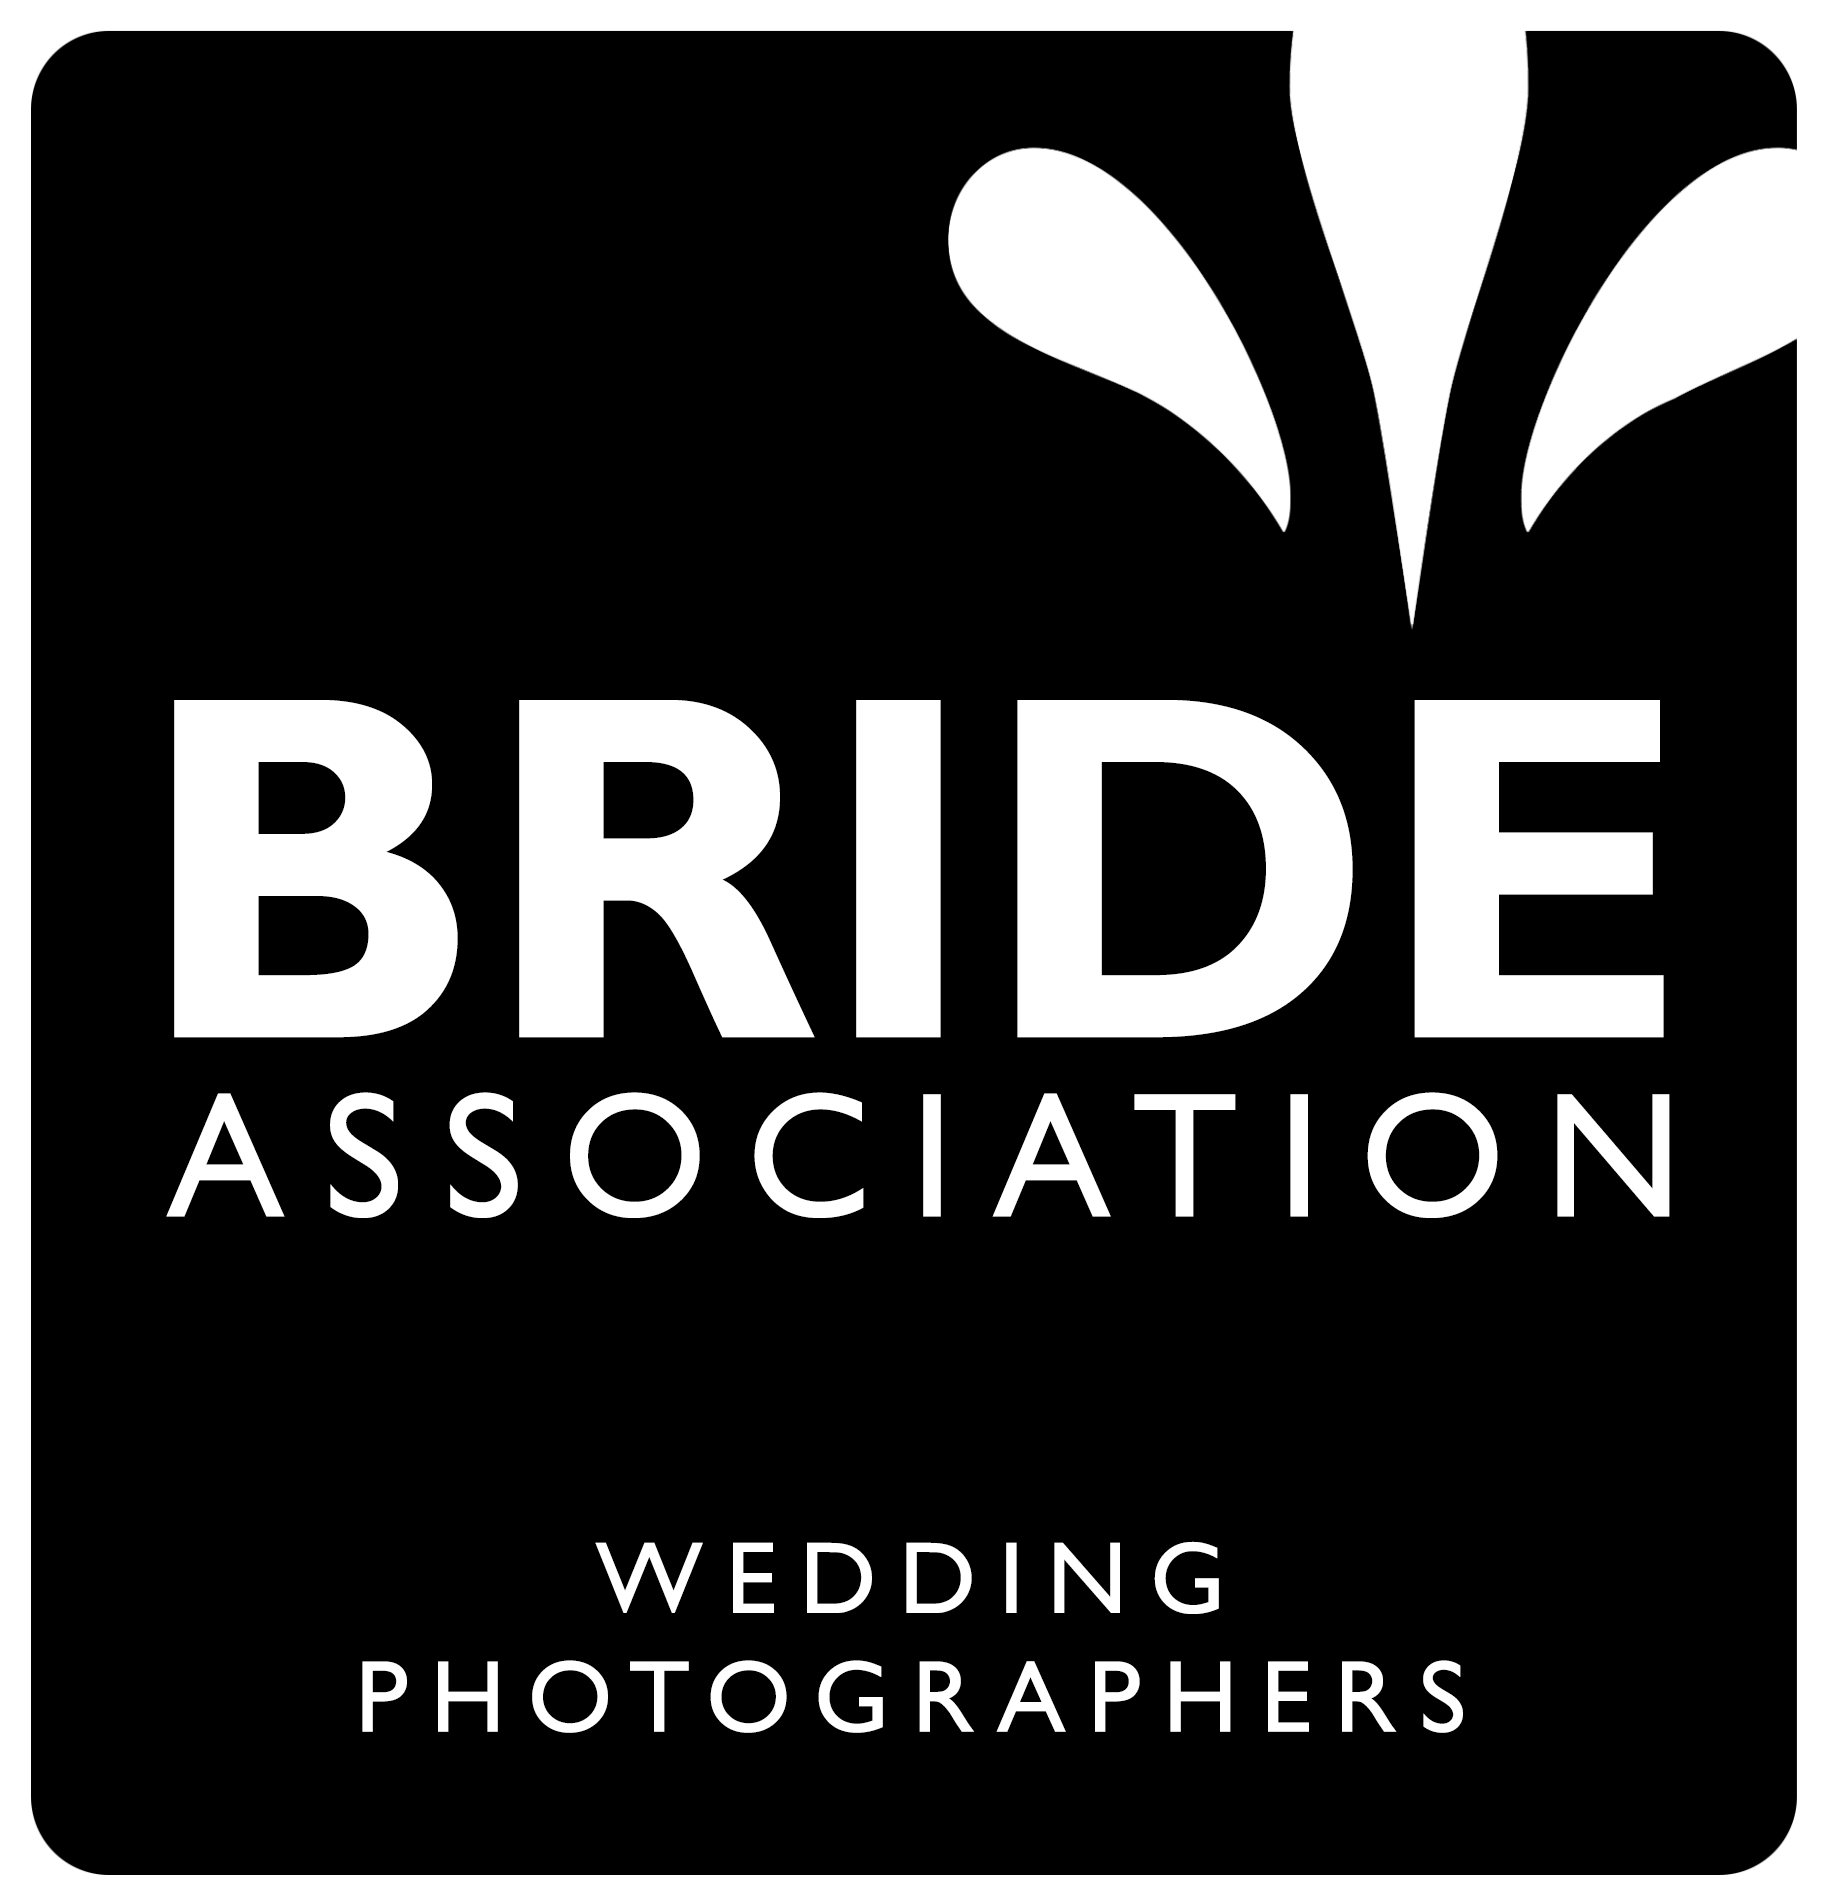 Bride Association - Bruno Montt Fotografia